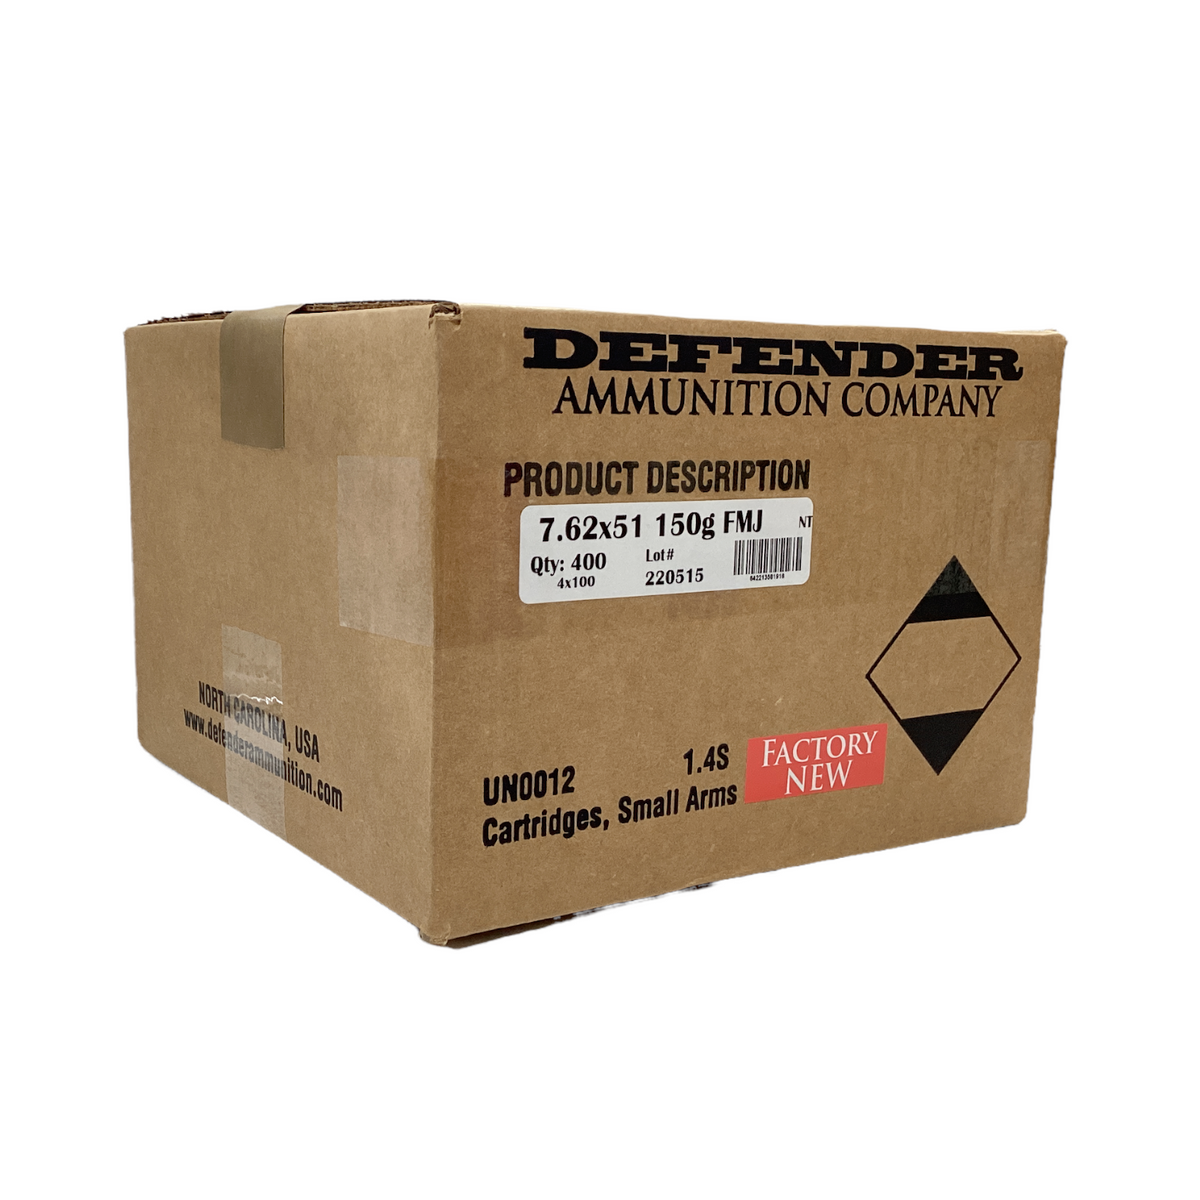 Ammunition Boxes--Cedar-Freeland Style – Hampel's Woodland Products